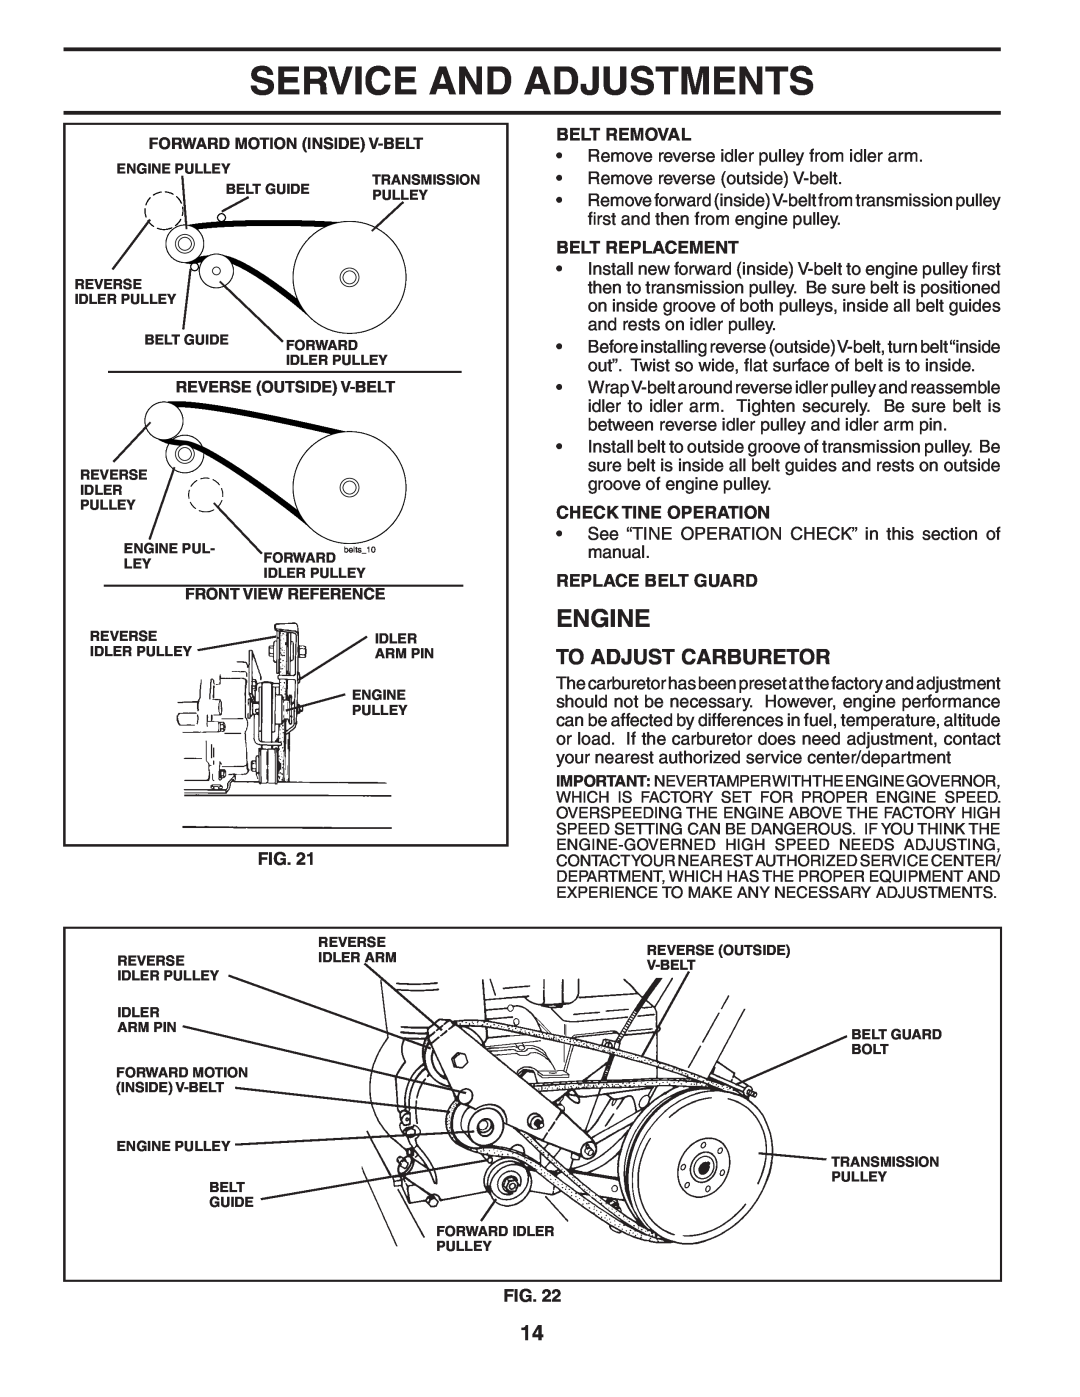 Poulan HDF550 manual To Adjust Carburetor, Belt Removal, Belt Replacement, Check Tine Operation, Replace Belt Guard, Engine 